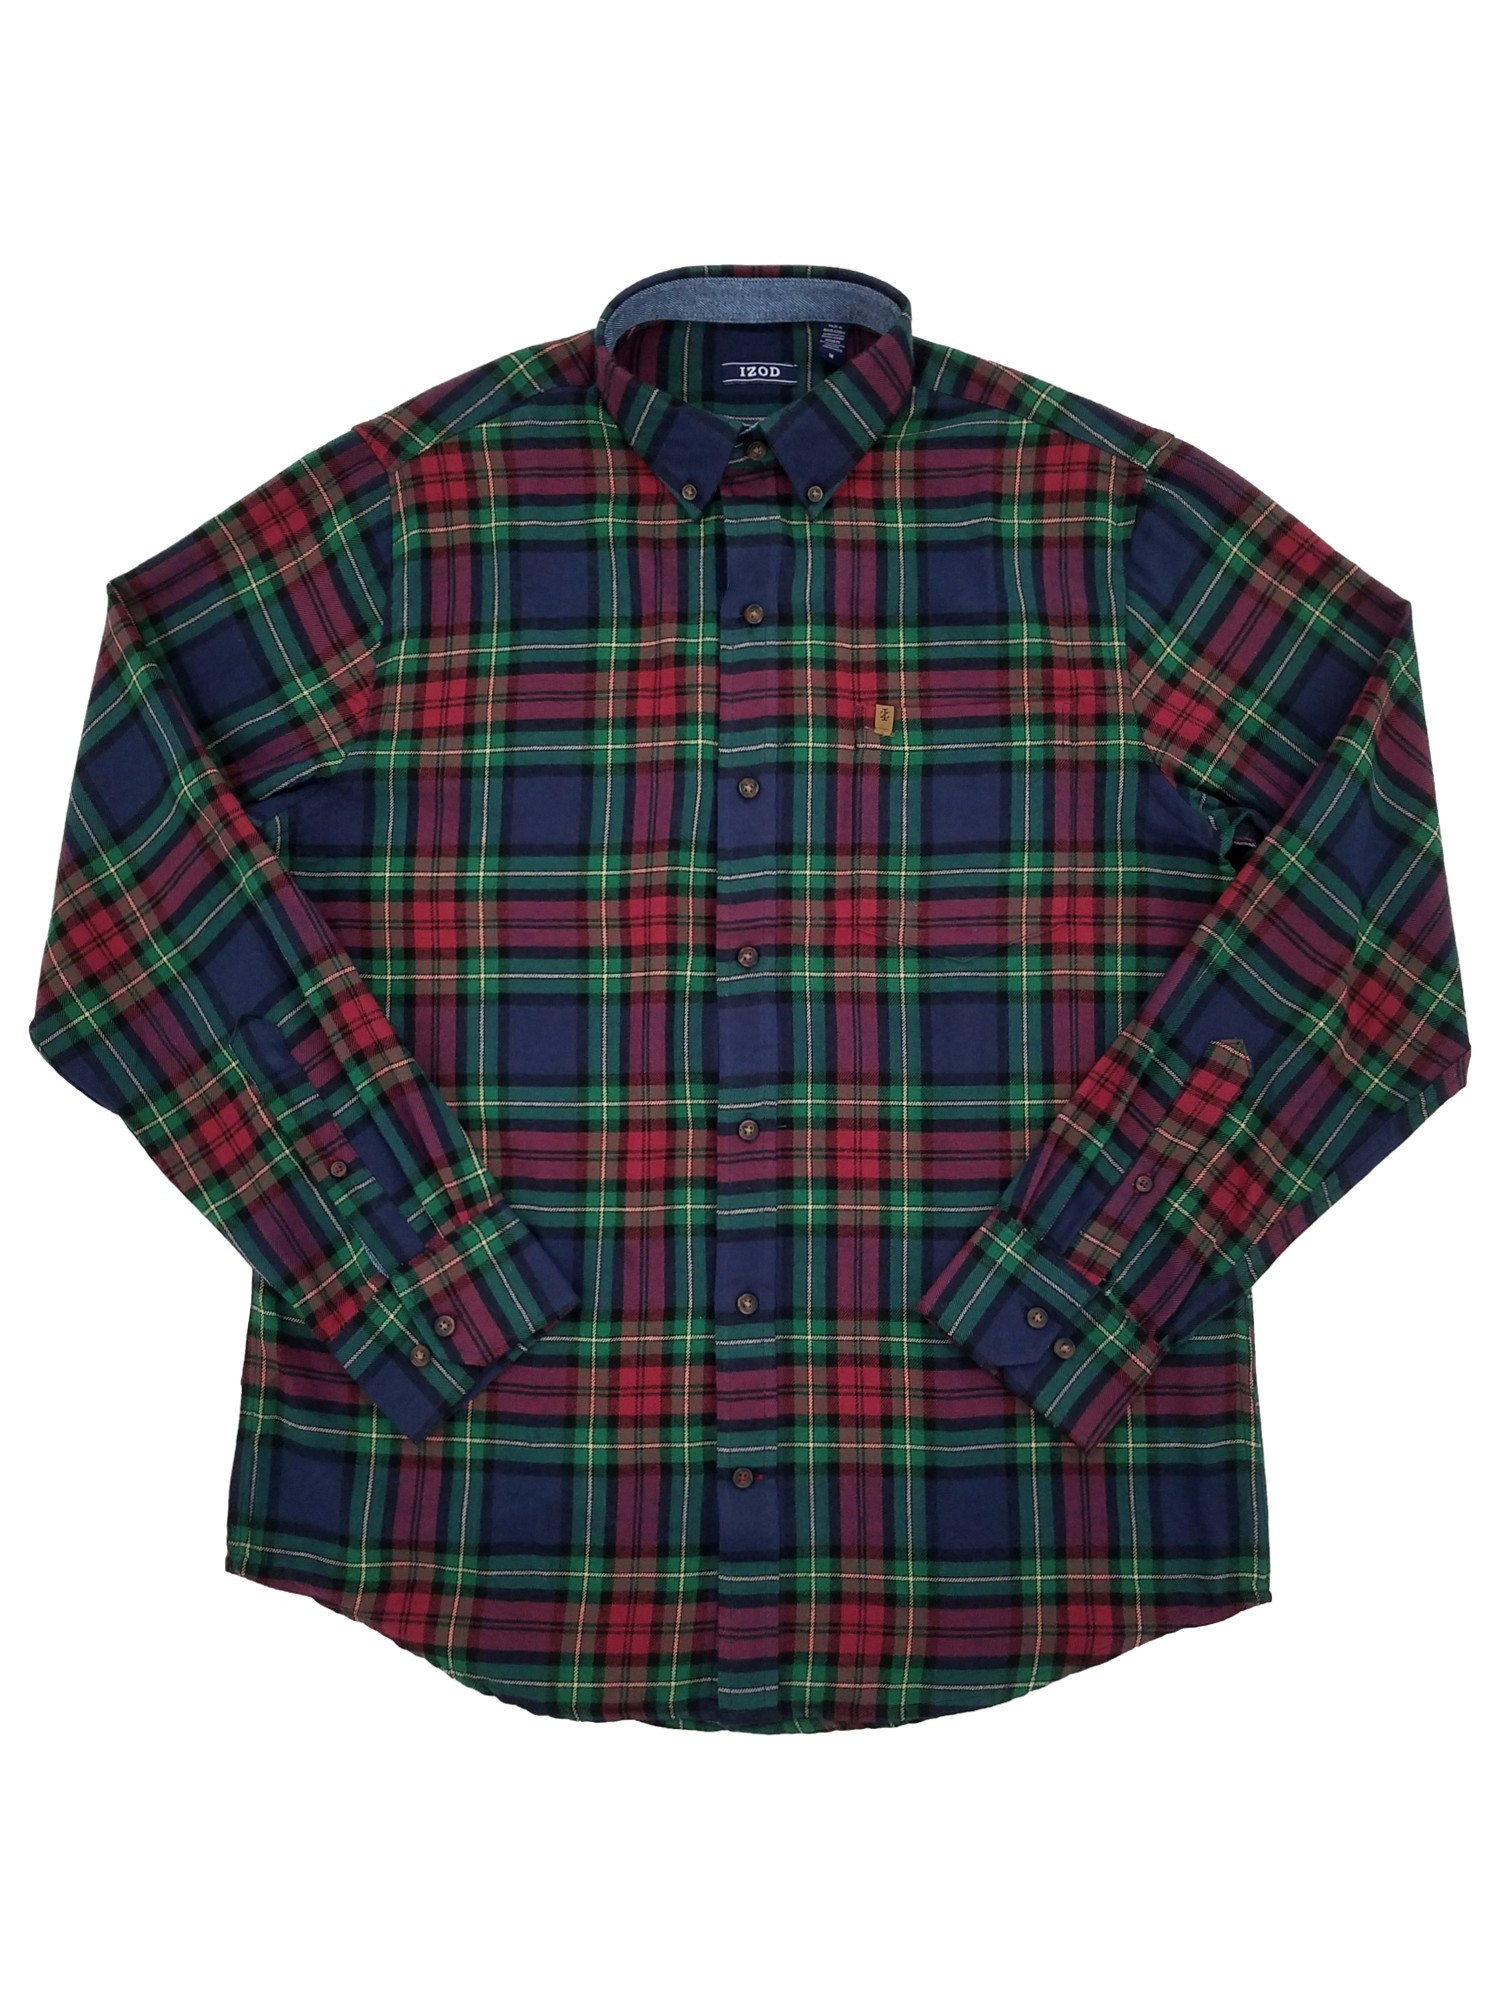 IZOD Mens Red Green & Blue Plaid Long Sleeve Button-Down Flannel Shirt